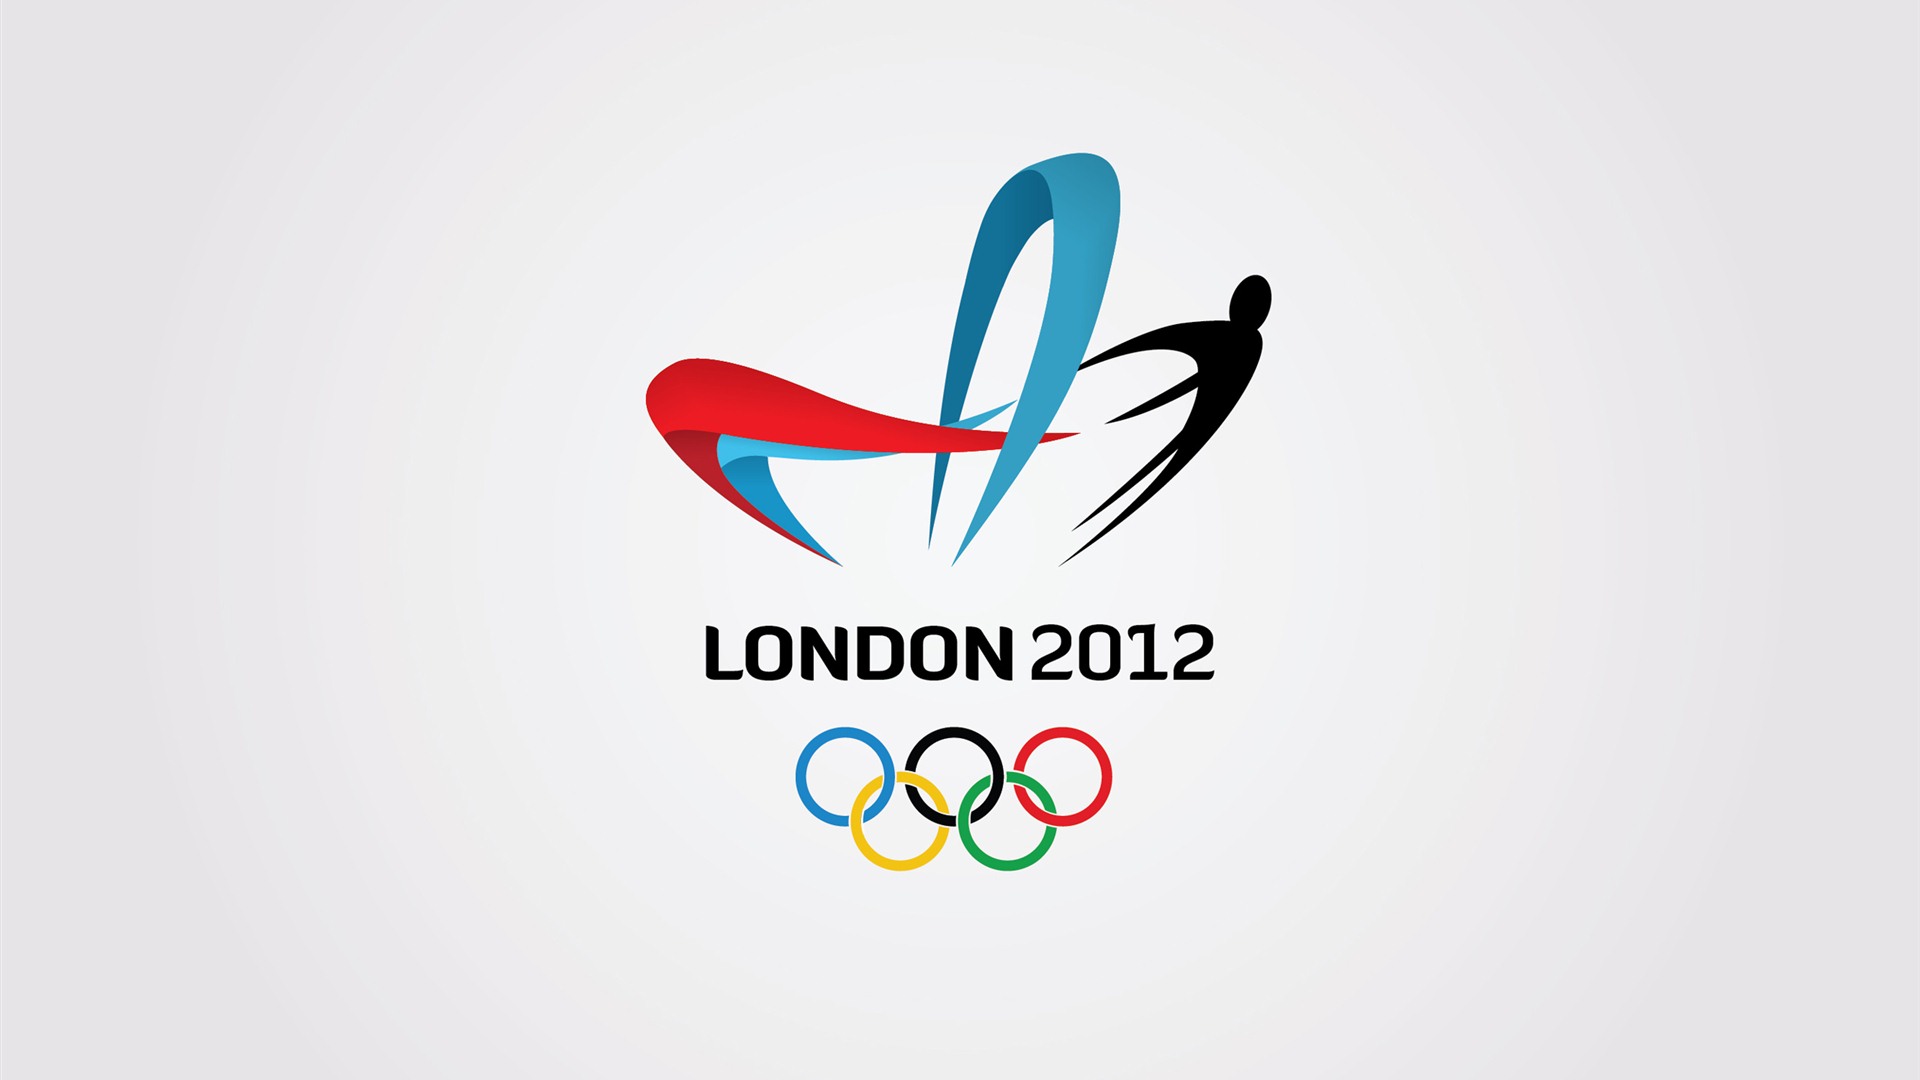 London 2012 Olympics theme wallpapers (2) #25 - 1920x1080